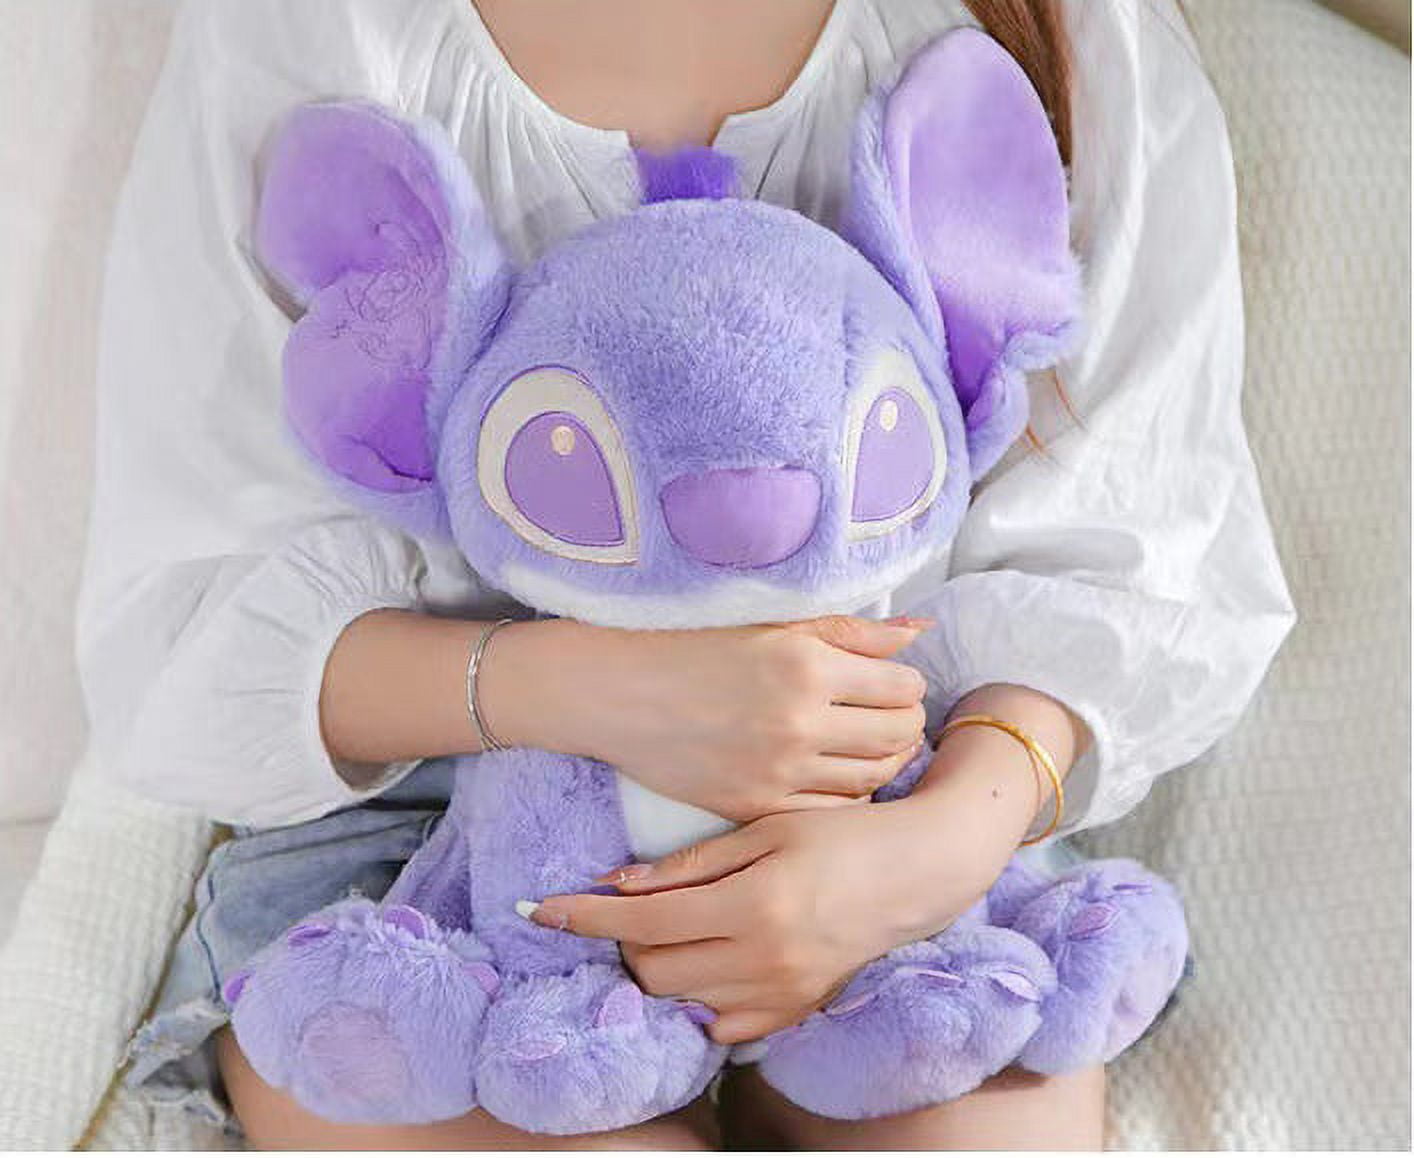 DISNEY LILO STITCH Purple Plush Doll Toys Kawaii Soft Stuffed Cartoon Gifts  $20.76 - PicClick AU